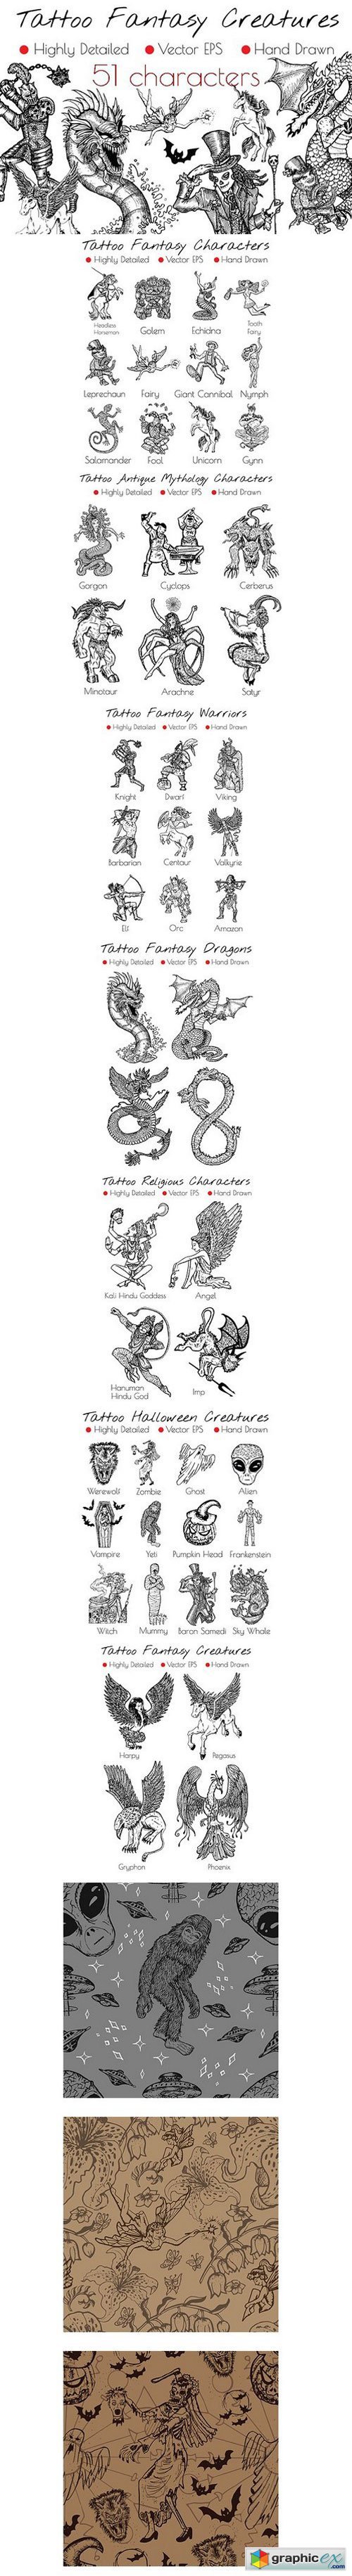 Tattoo Fantasy Characters